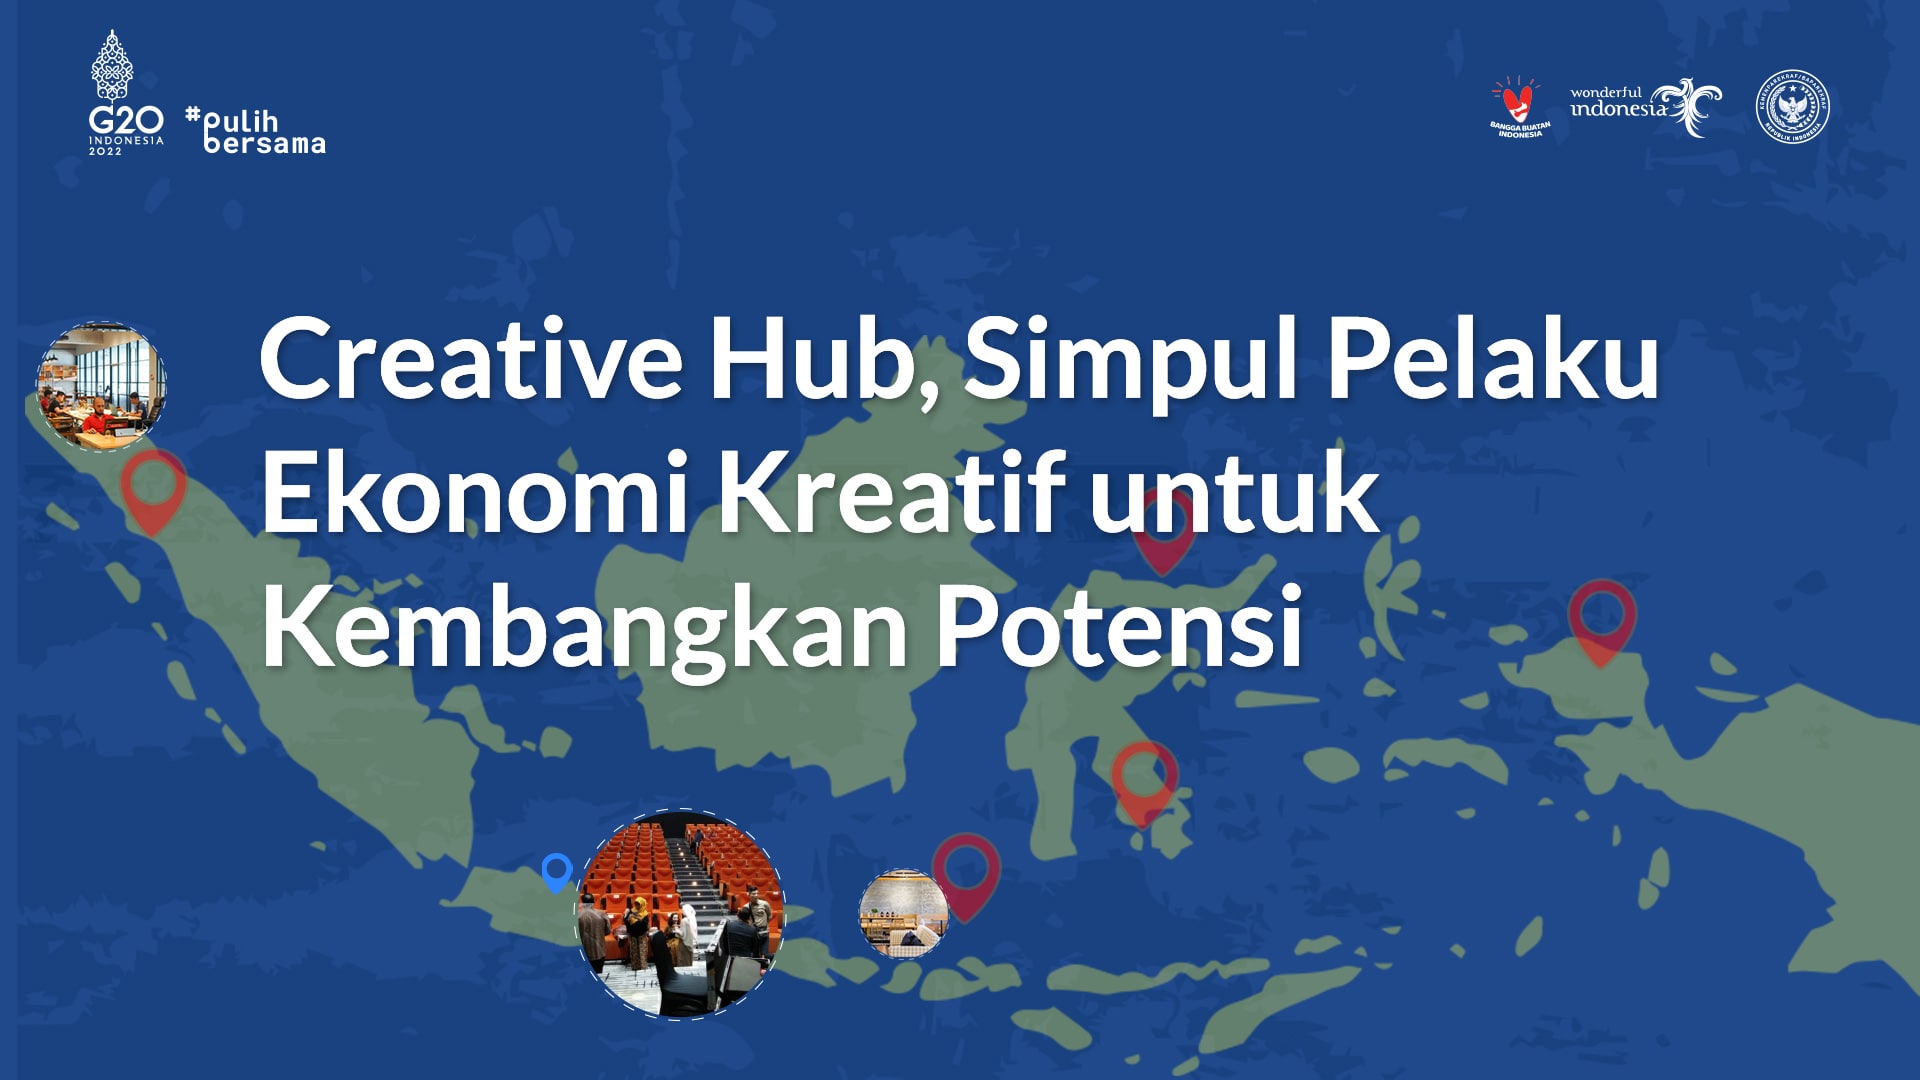 Creative Hub, Simpul Pelaku Ekonomi Kreatif untuk Kembangkan Potensi